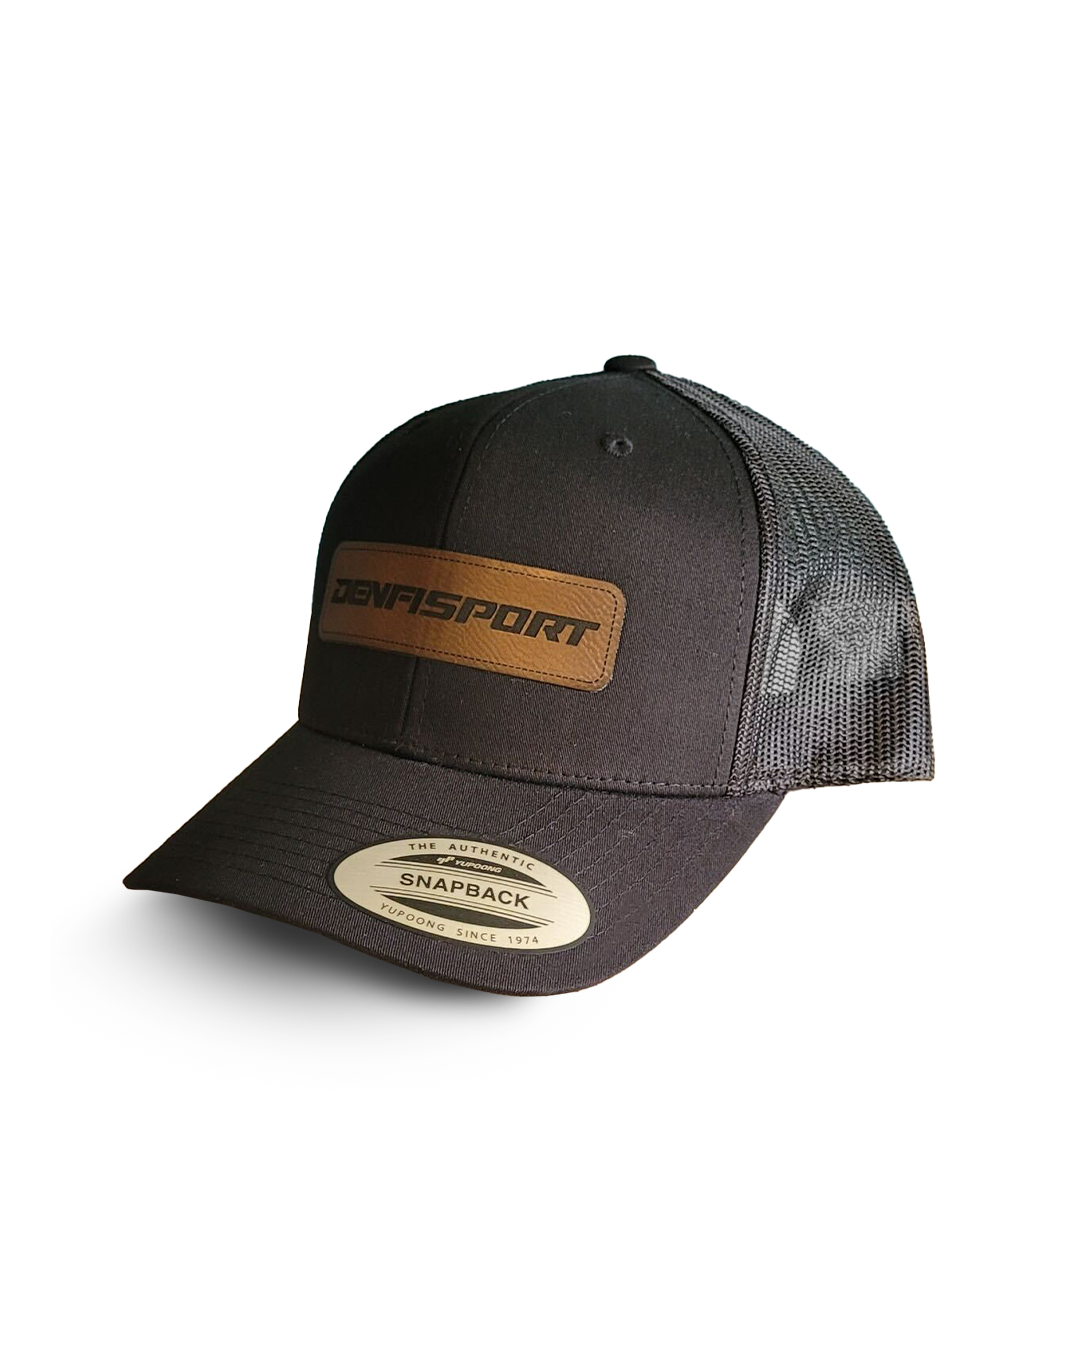 Denfi Sport hat